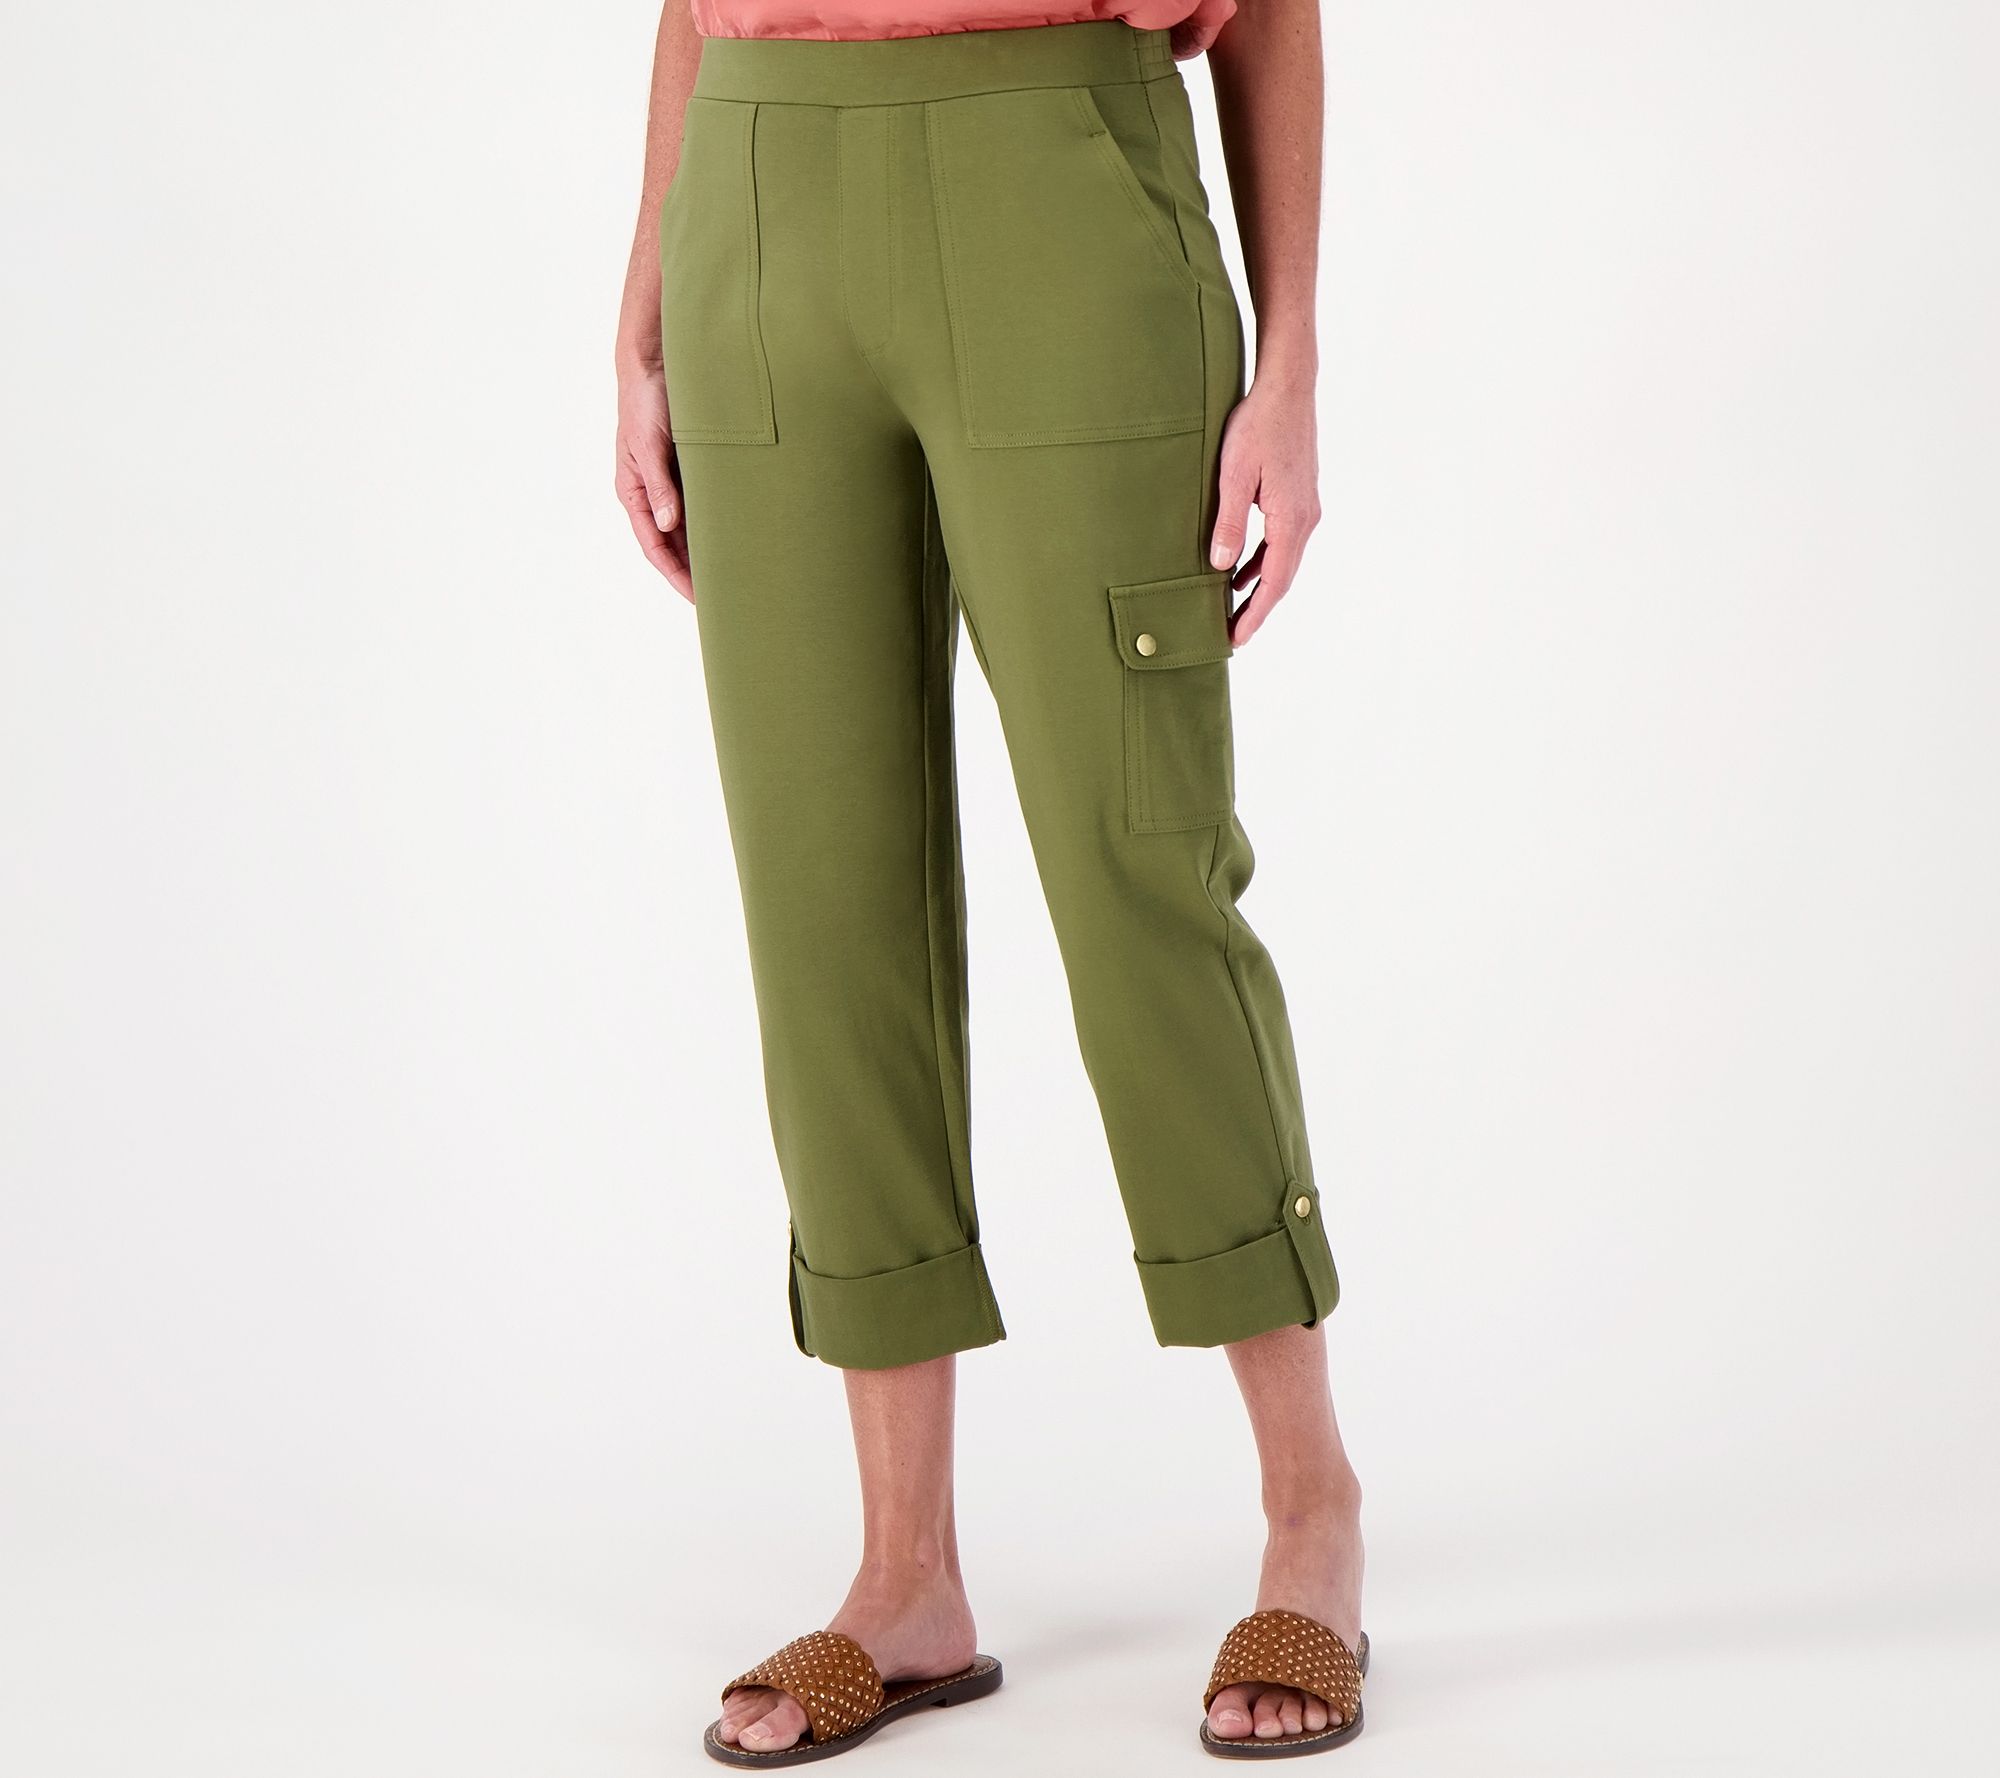 SUSAN GRAVER WOMENS Premium Stretch Crop Pants Medium M Black A303340  £21.73 - PicClick UK